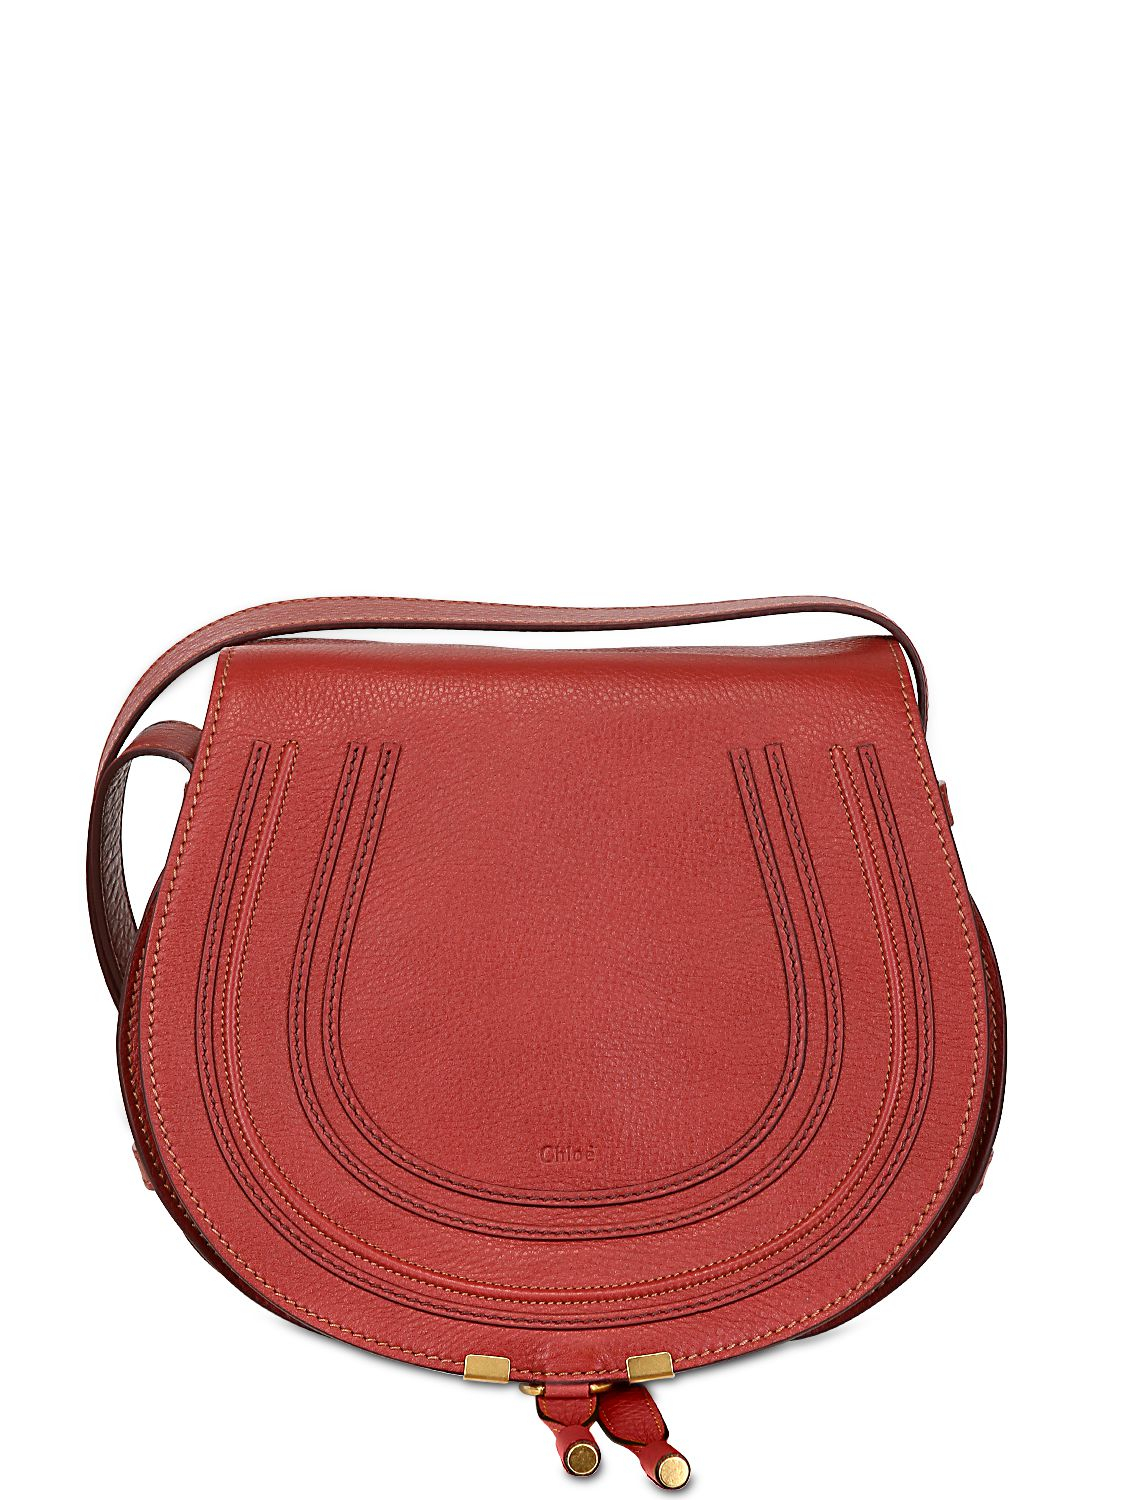 Chloé Medium Marcie Leather Crossbody Bag in Red (BERRY CUPCAKE) | Lyst